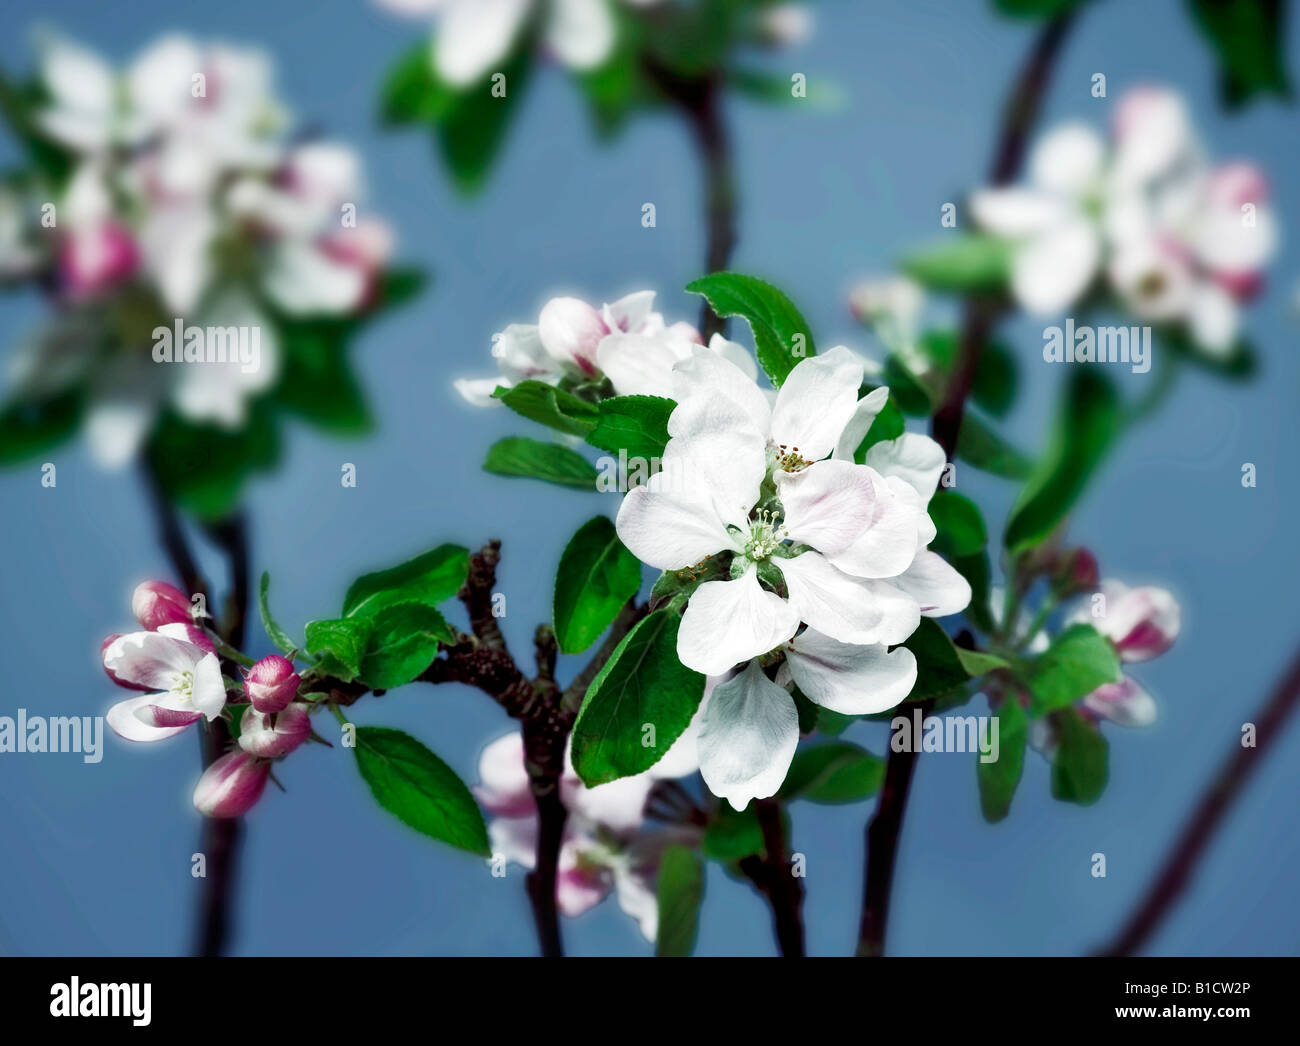 Common Name: Apple blossom Latin Name: Malus Stock Photo